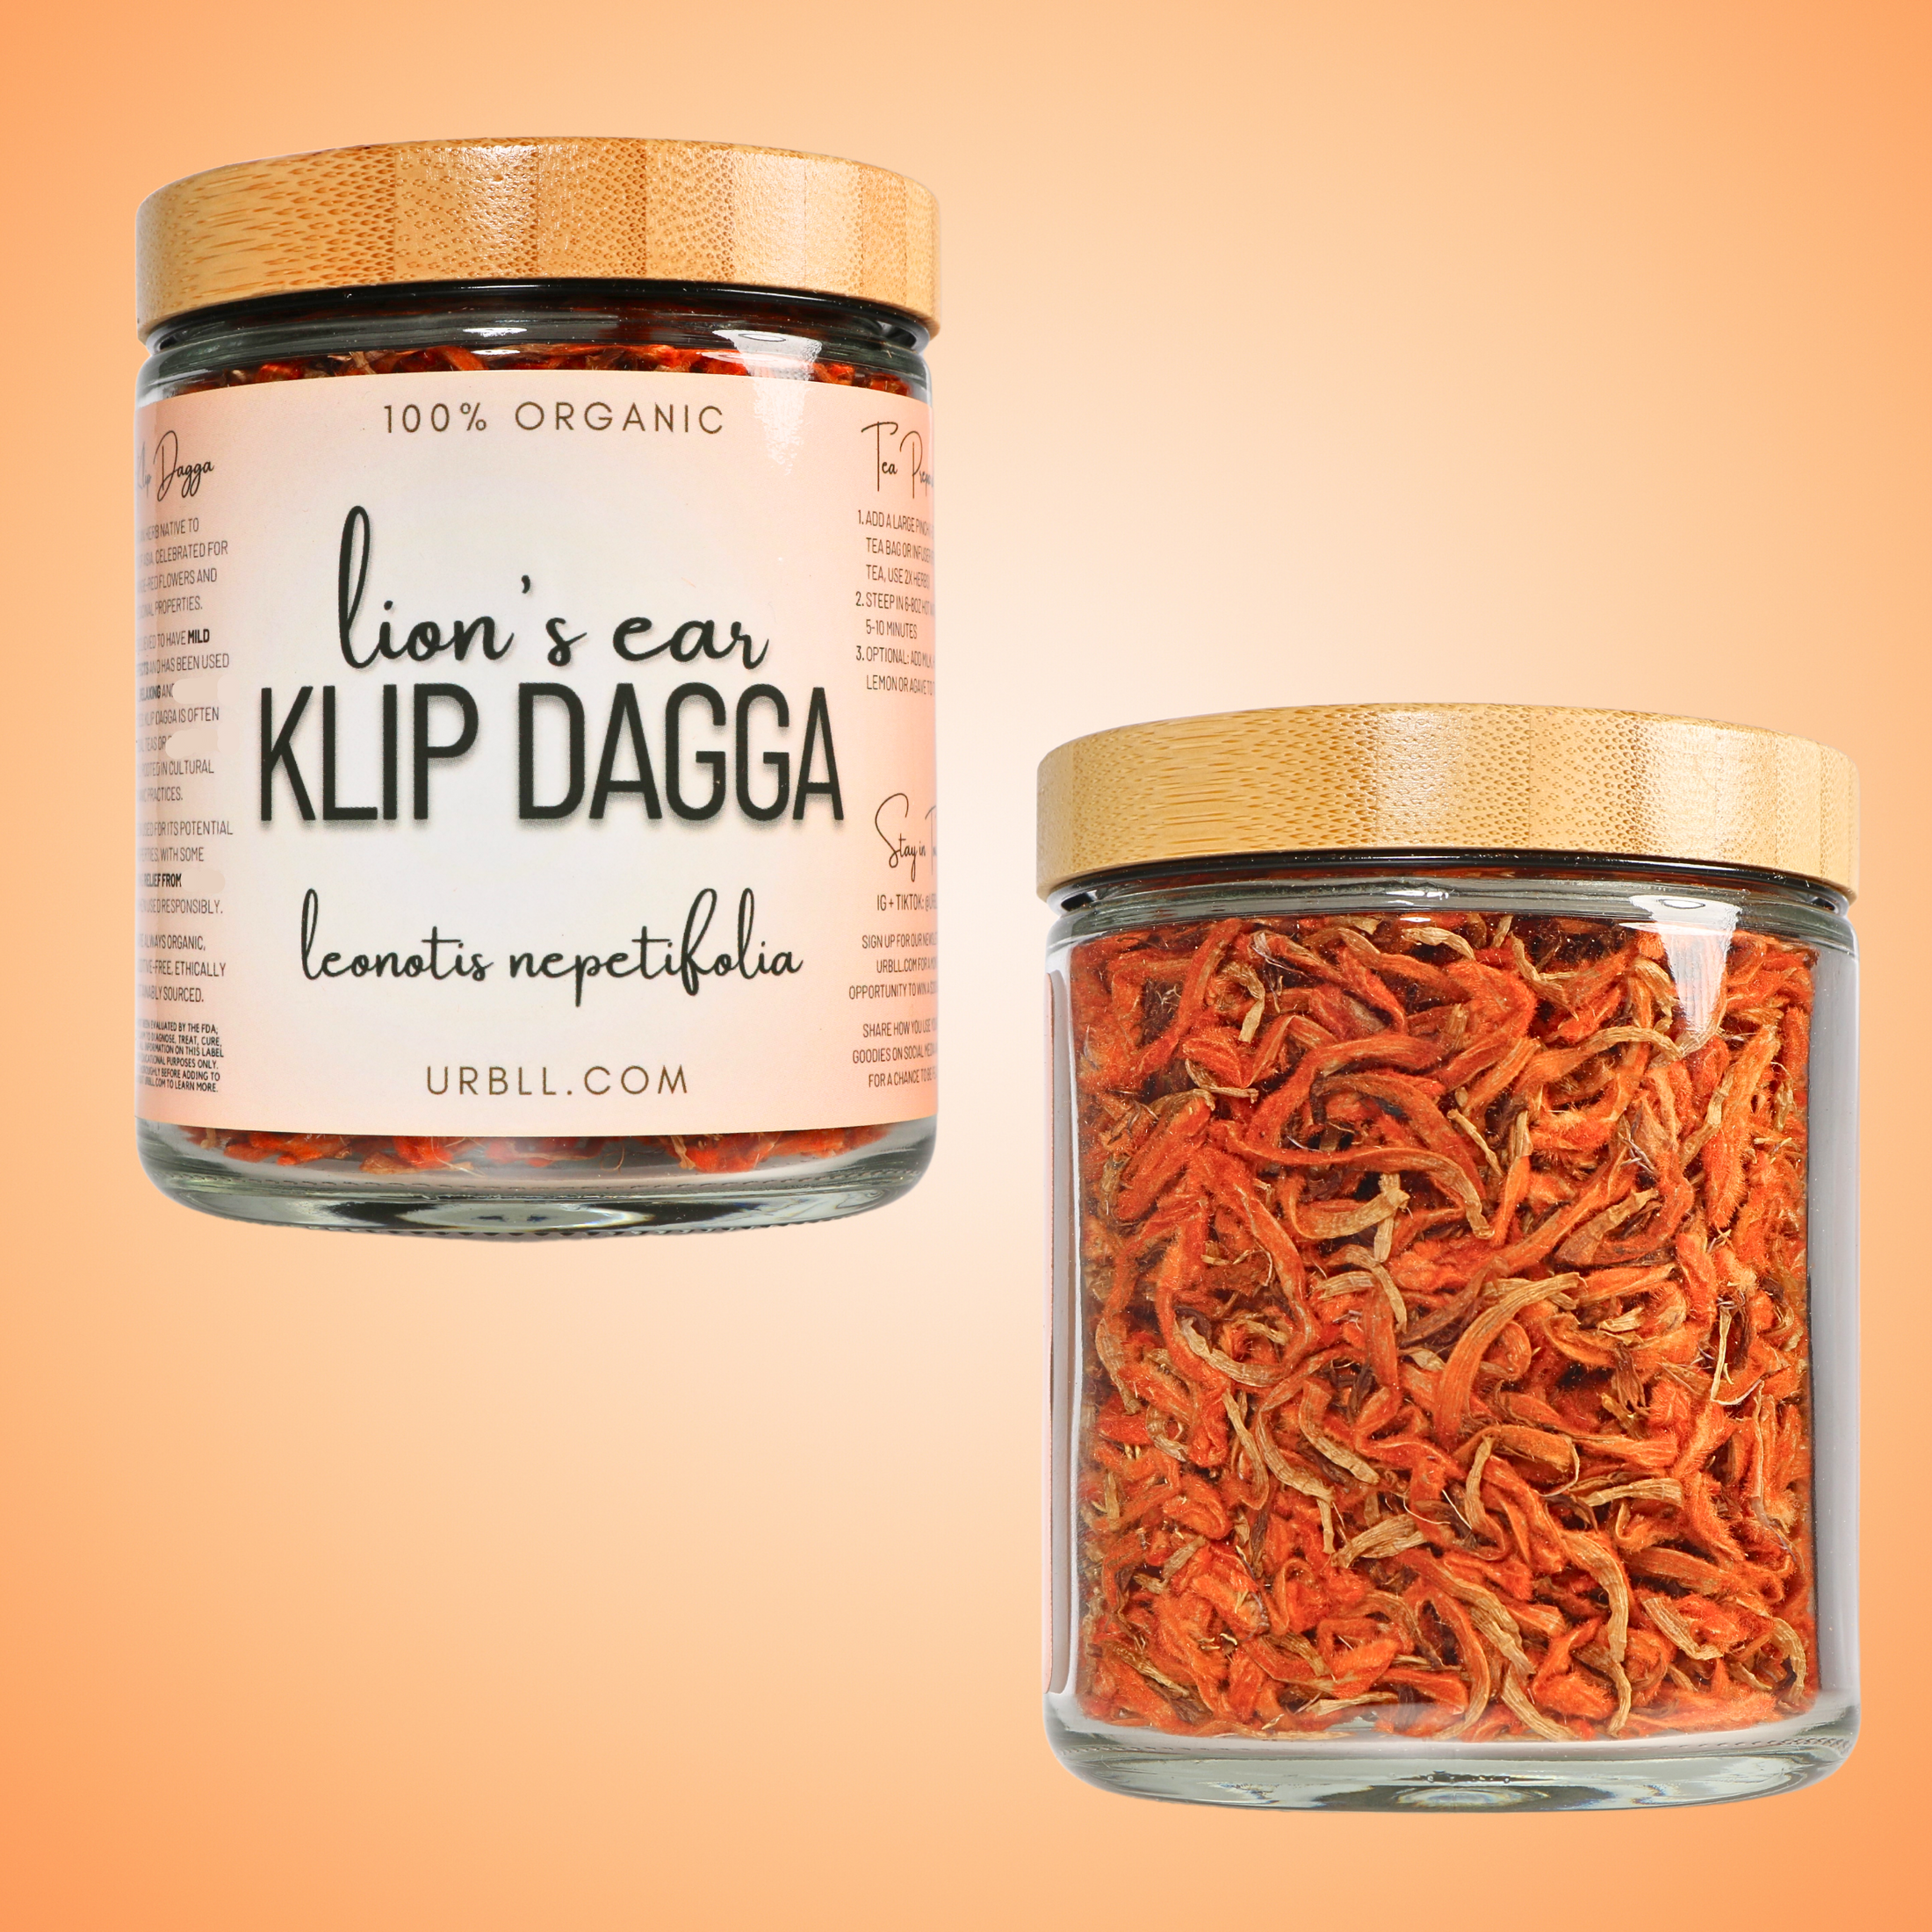 Klip Dagga "Lion's Ear" Petals - Organic